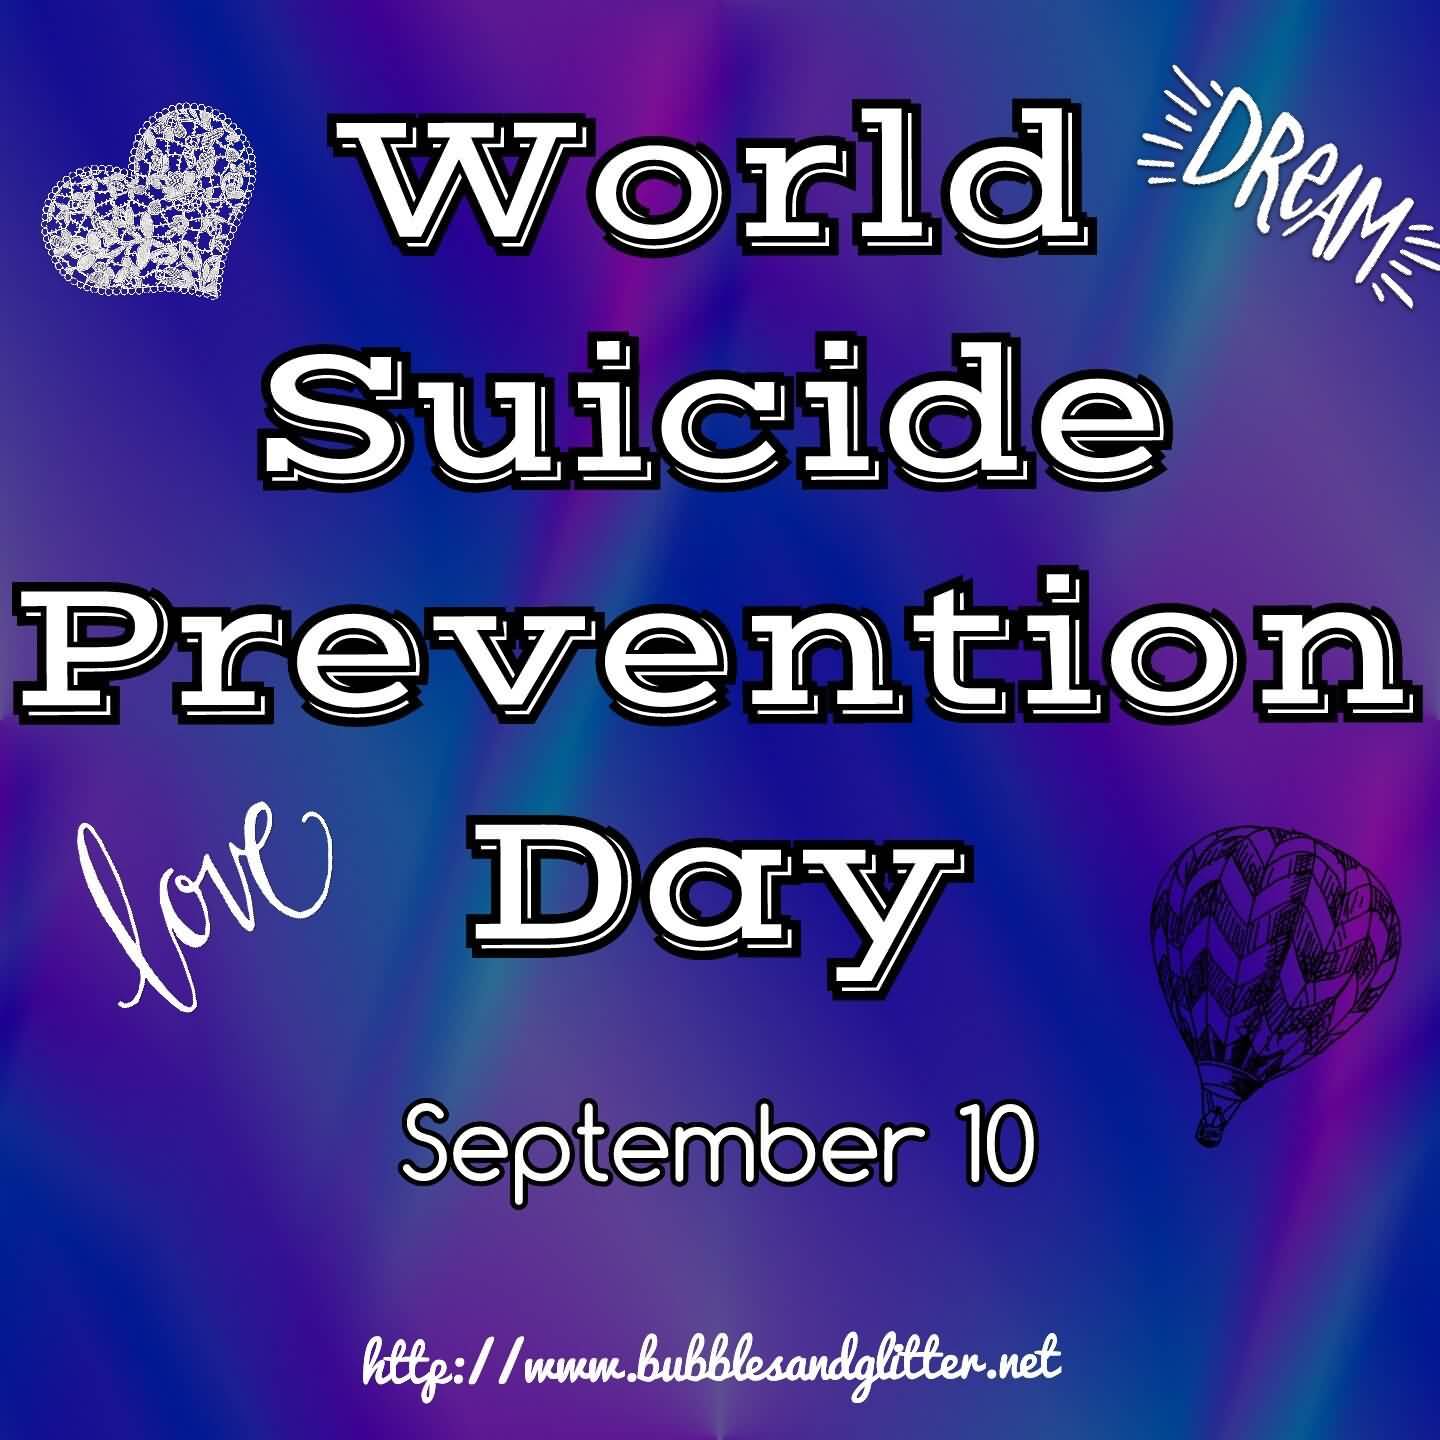 World Suicide Prevention Day September 10 Image